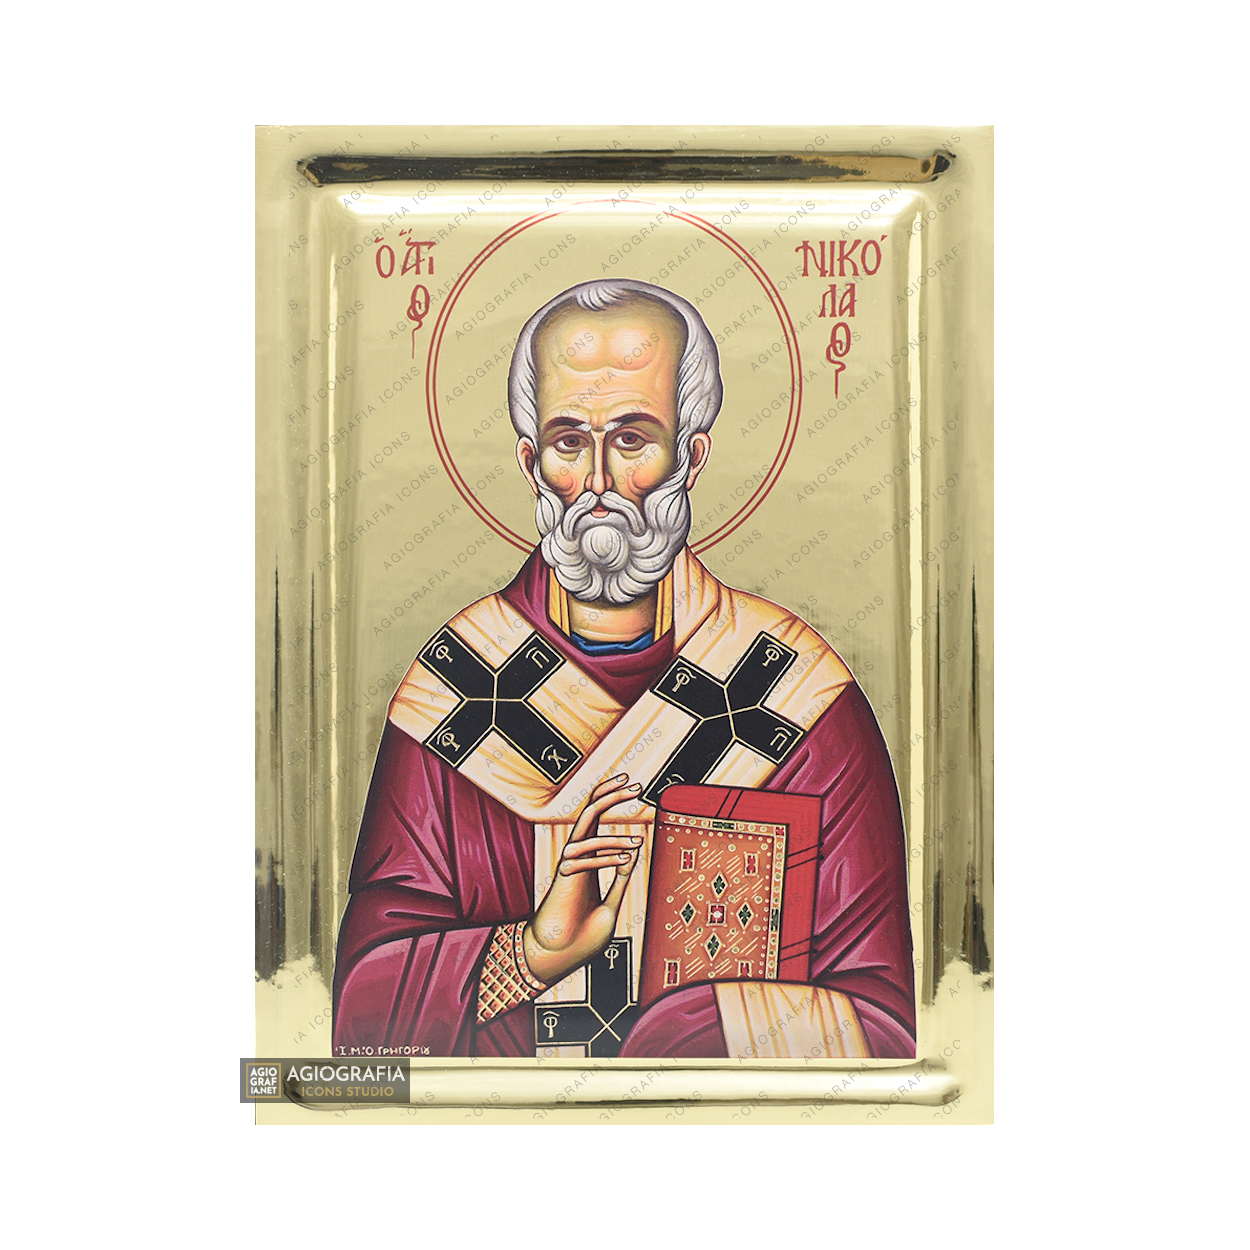 St Nicholas Byzantine Orthodox Wood Icon with Gilding Effect